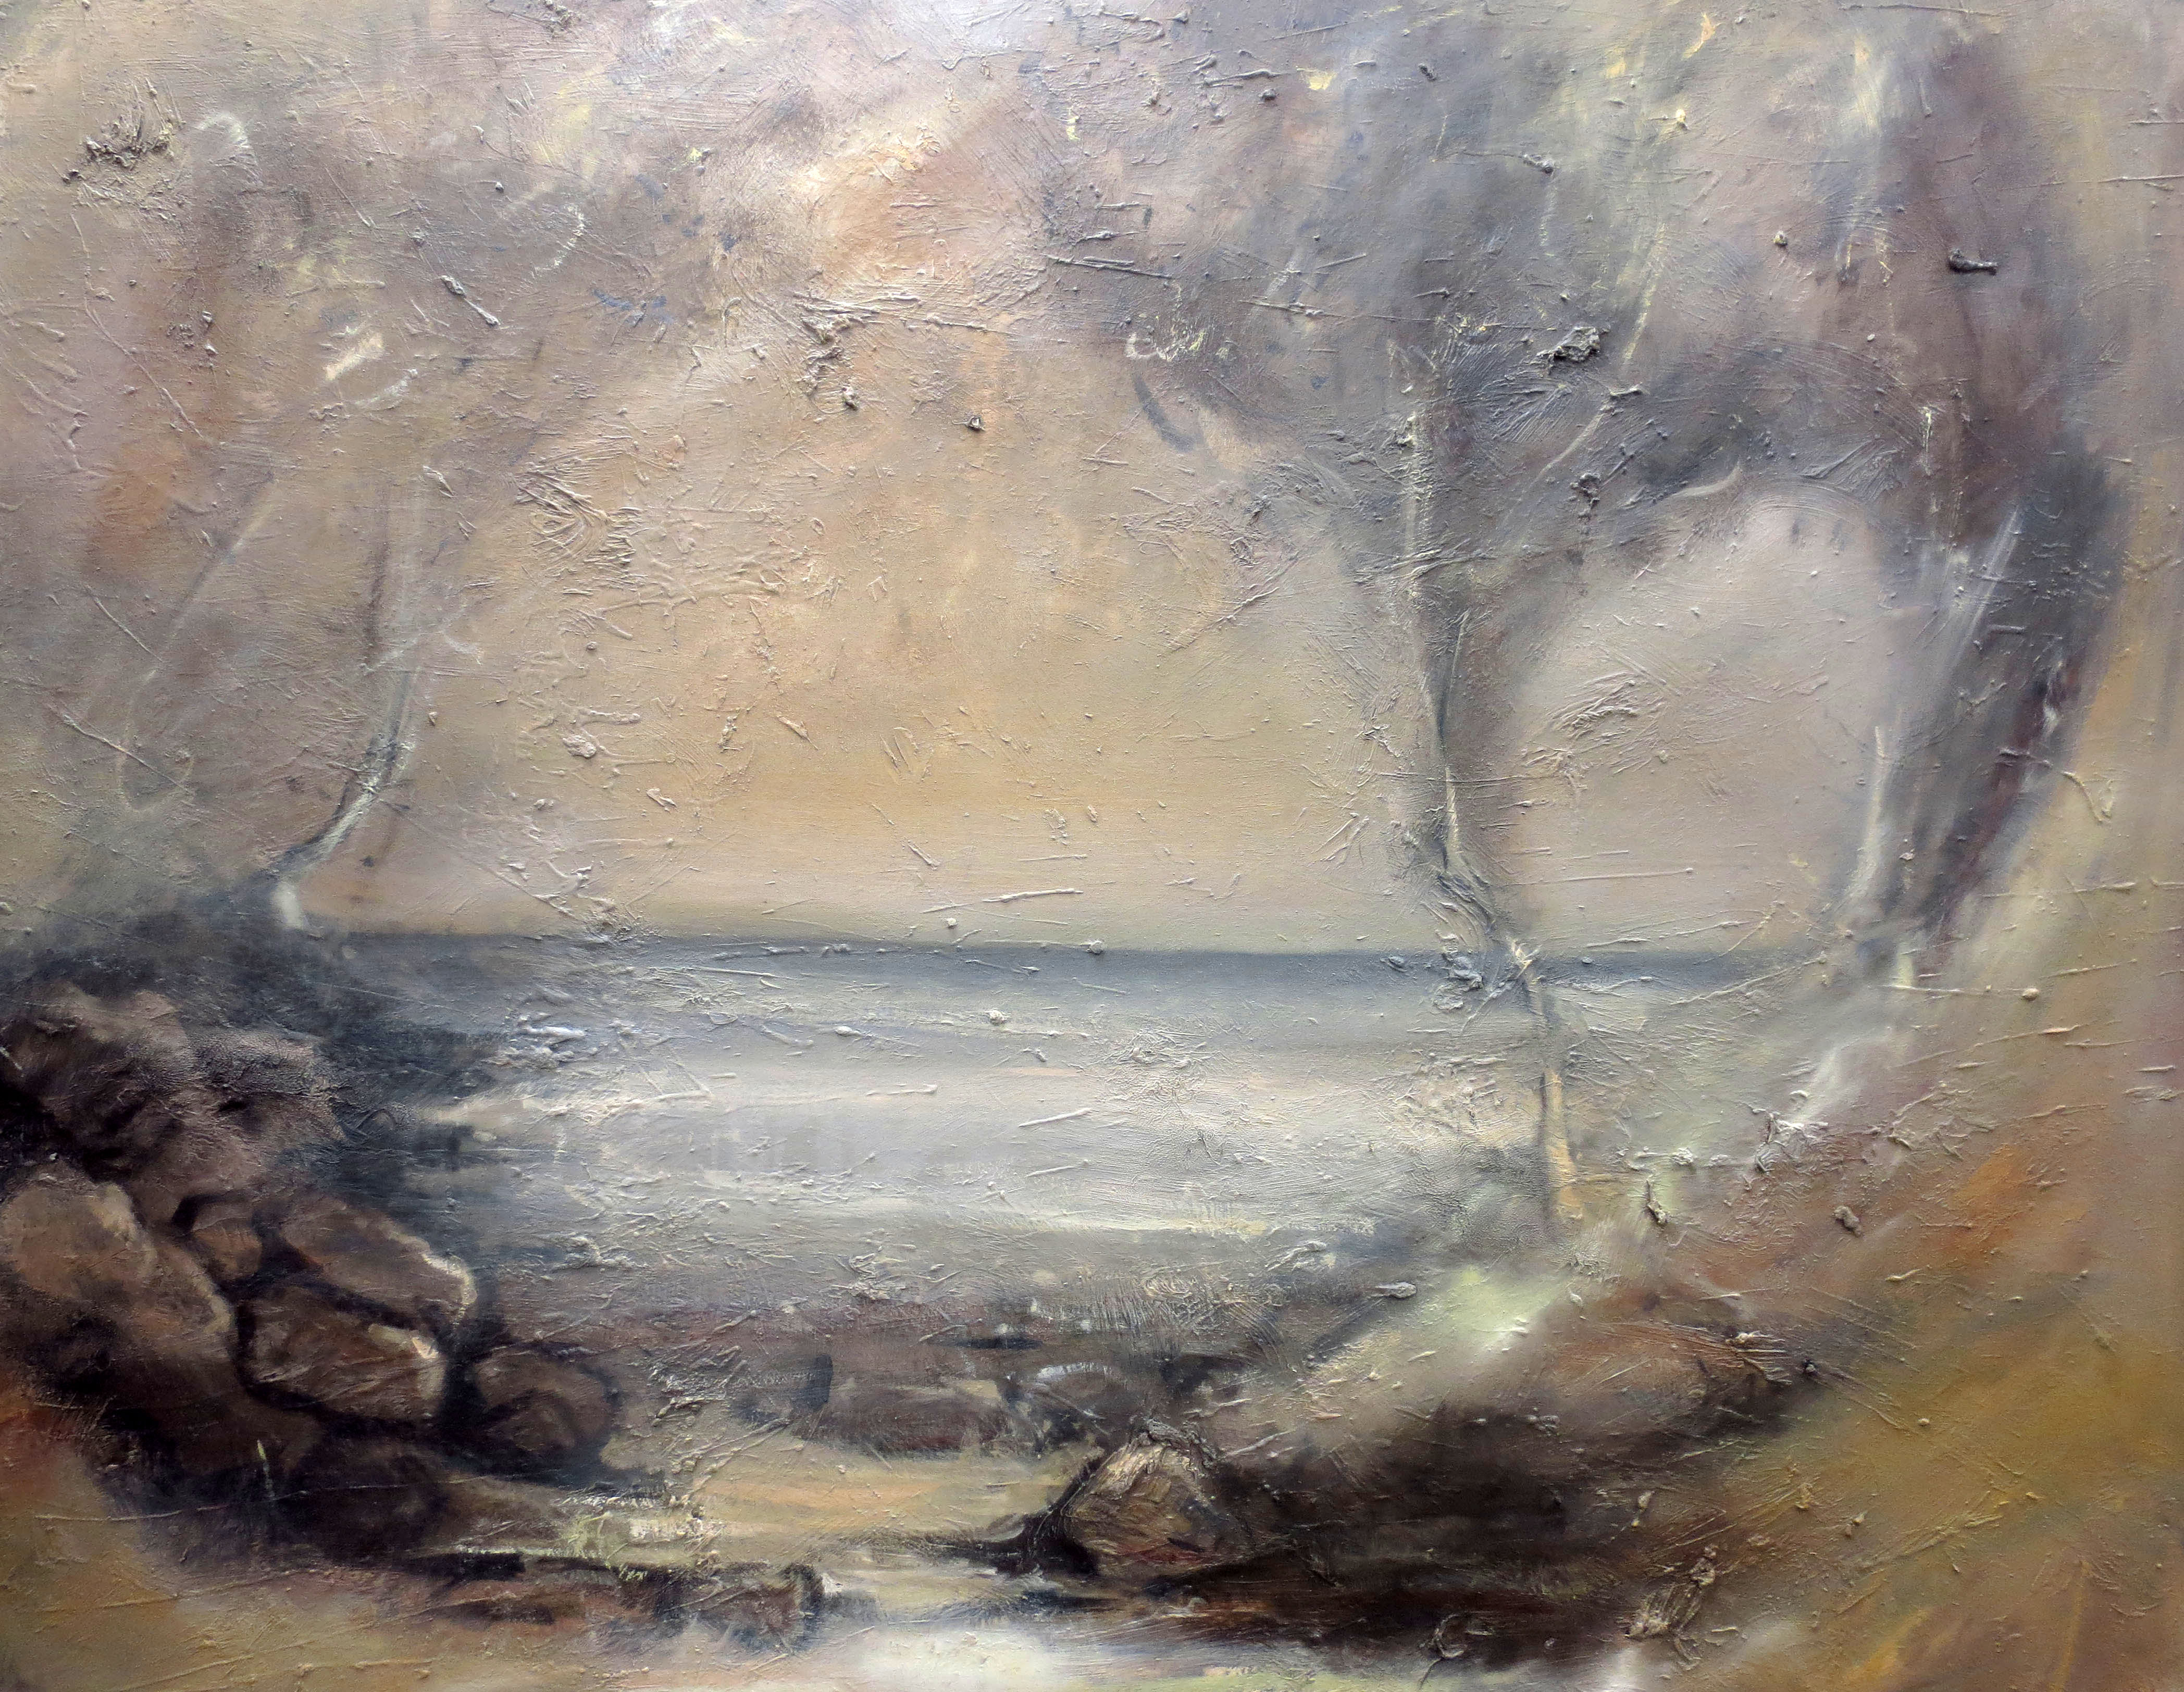 'The River Flows', oil on canvas, 122cm x 152cm, €4500 / £3900